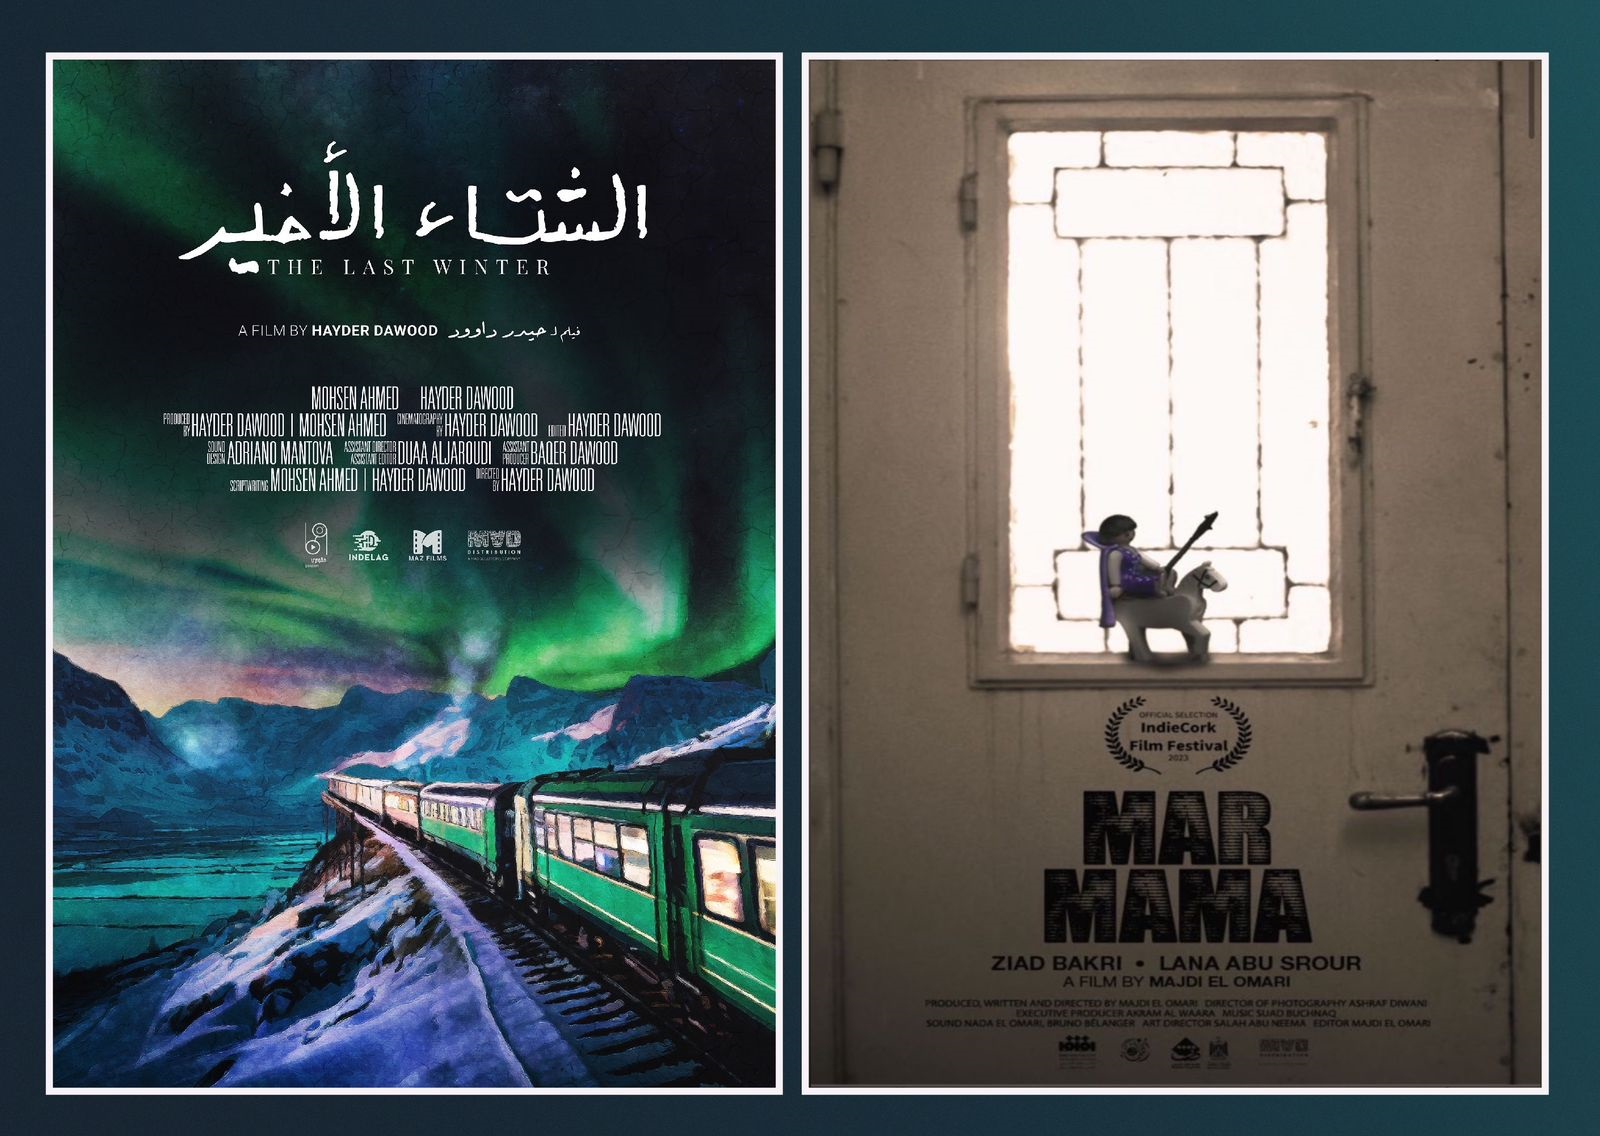 MAD Solutionsâ€™ MAR MAMA, THE LAST WINTER to feature at Ismailia Intâ€™l Film Festival